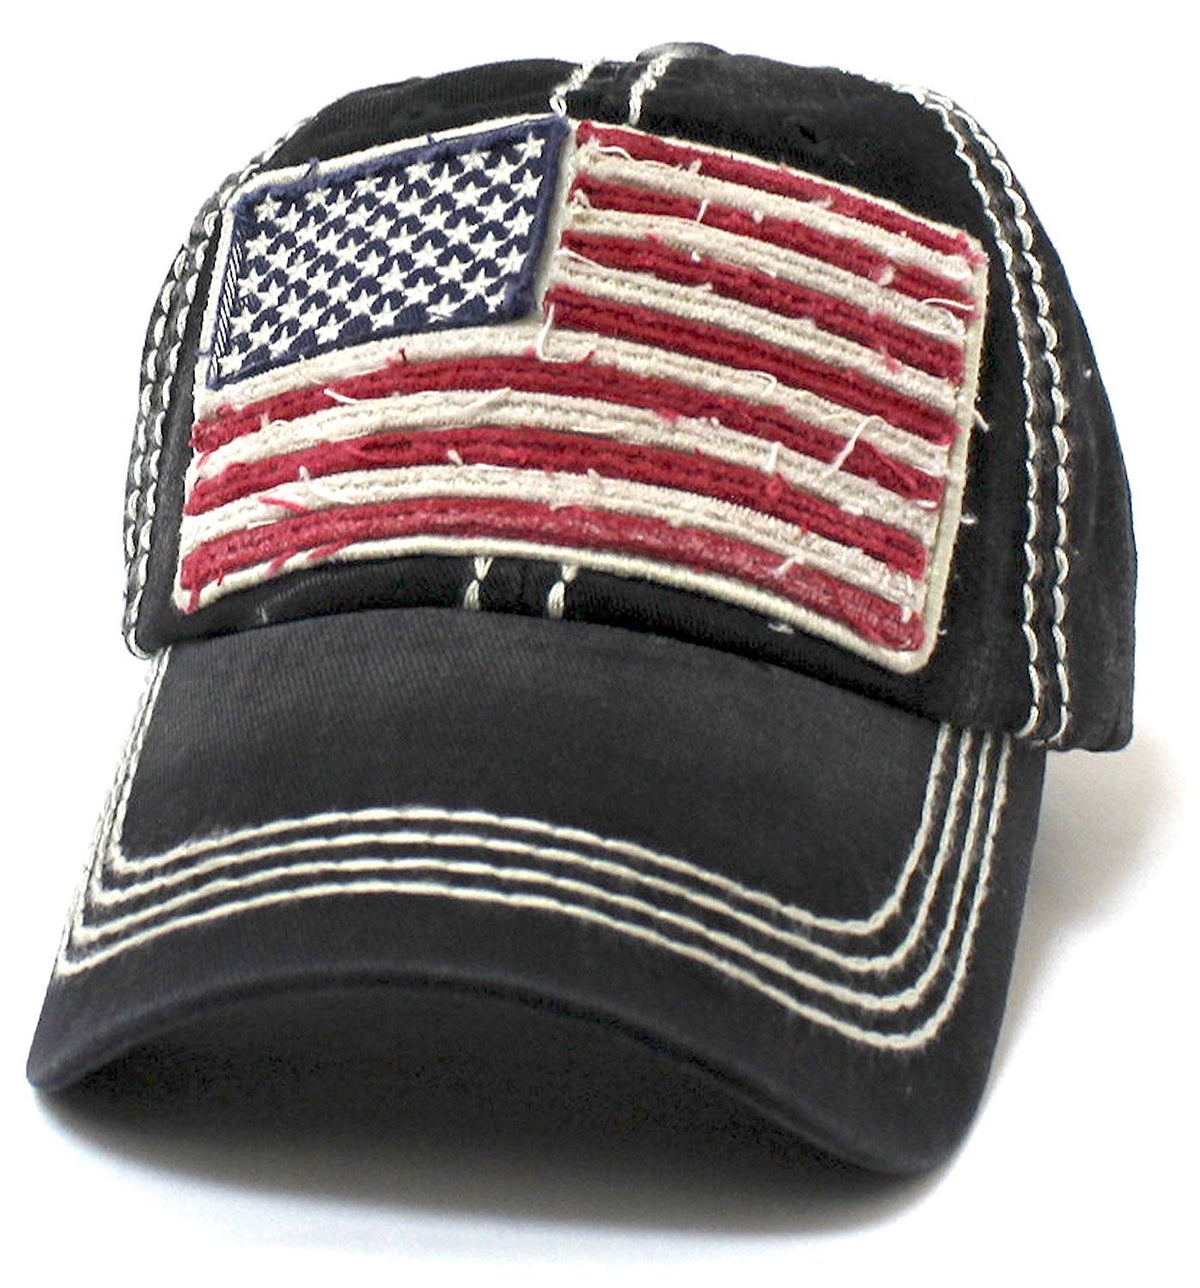 Oversized Vintage AMERICAN FLAG Patch Embroidery Baseball Cap, Black - Caps 'N Vintage 